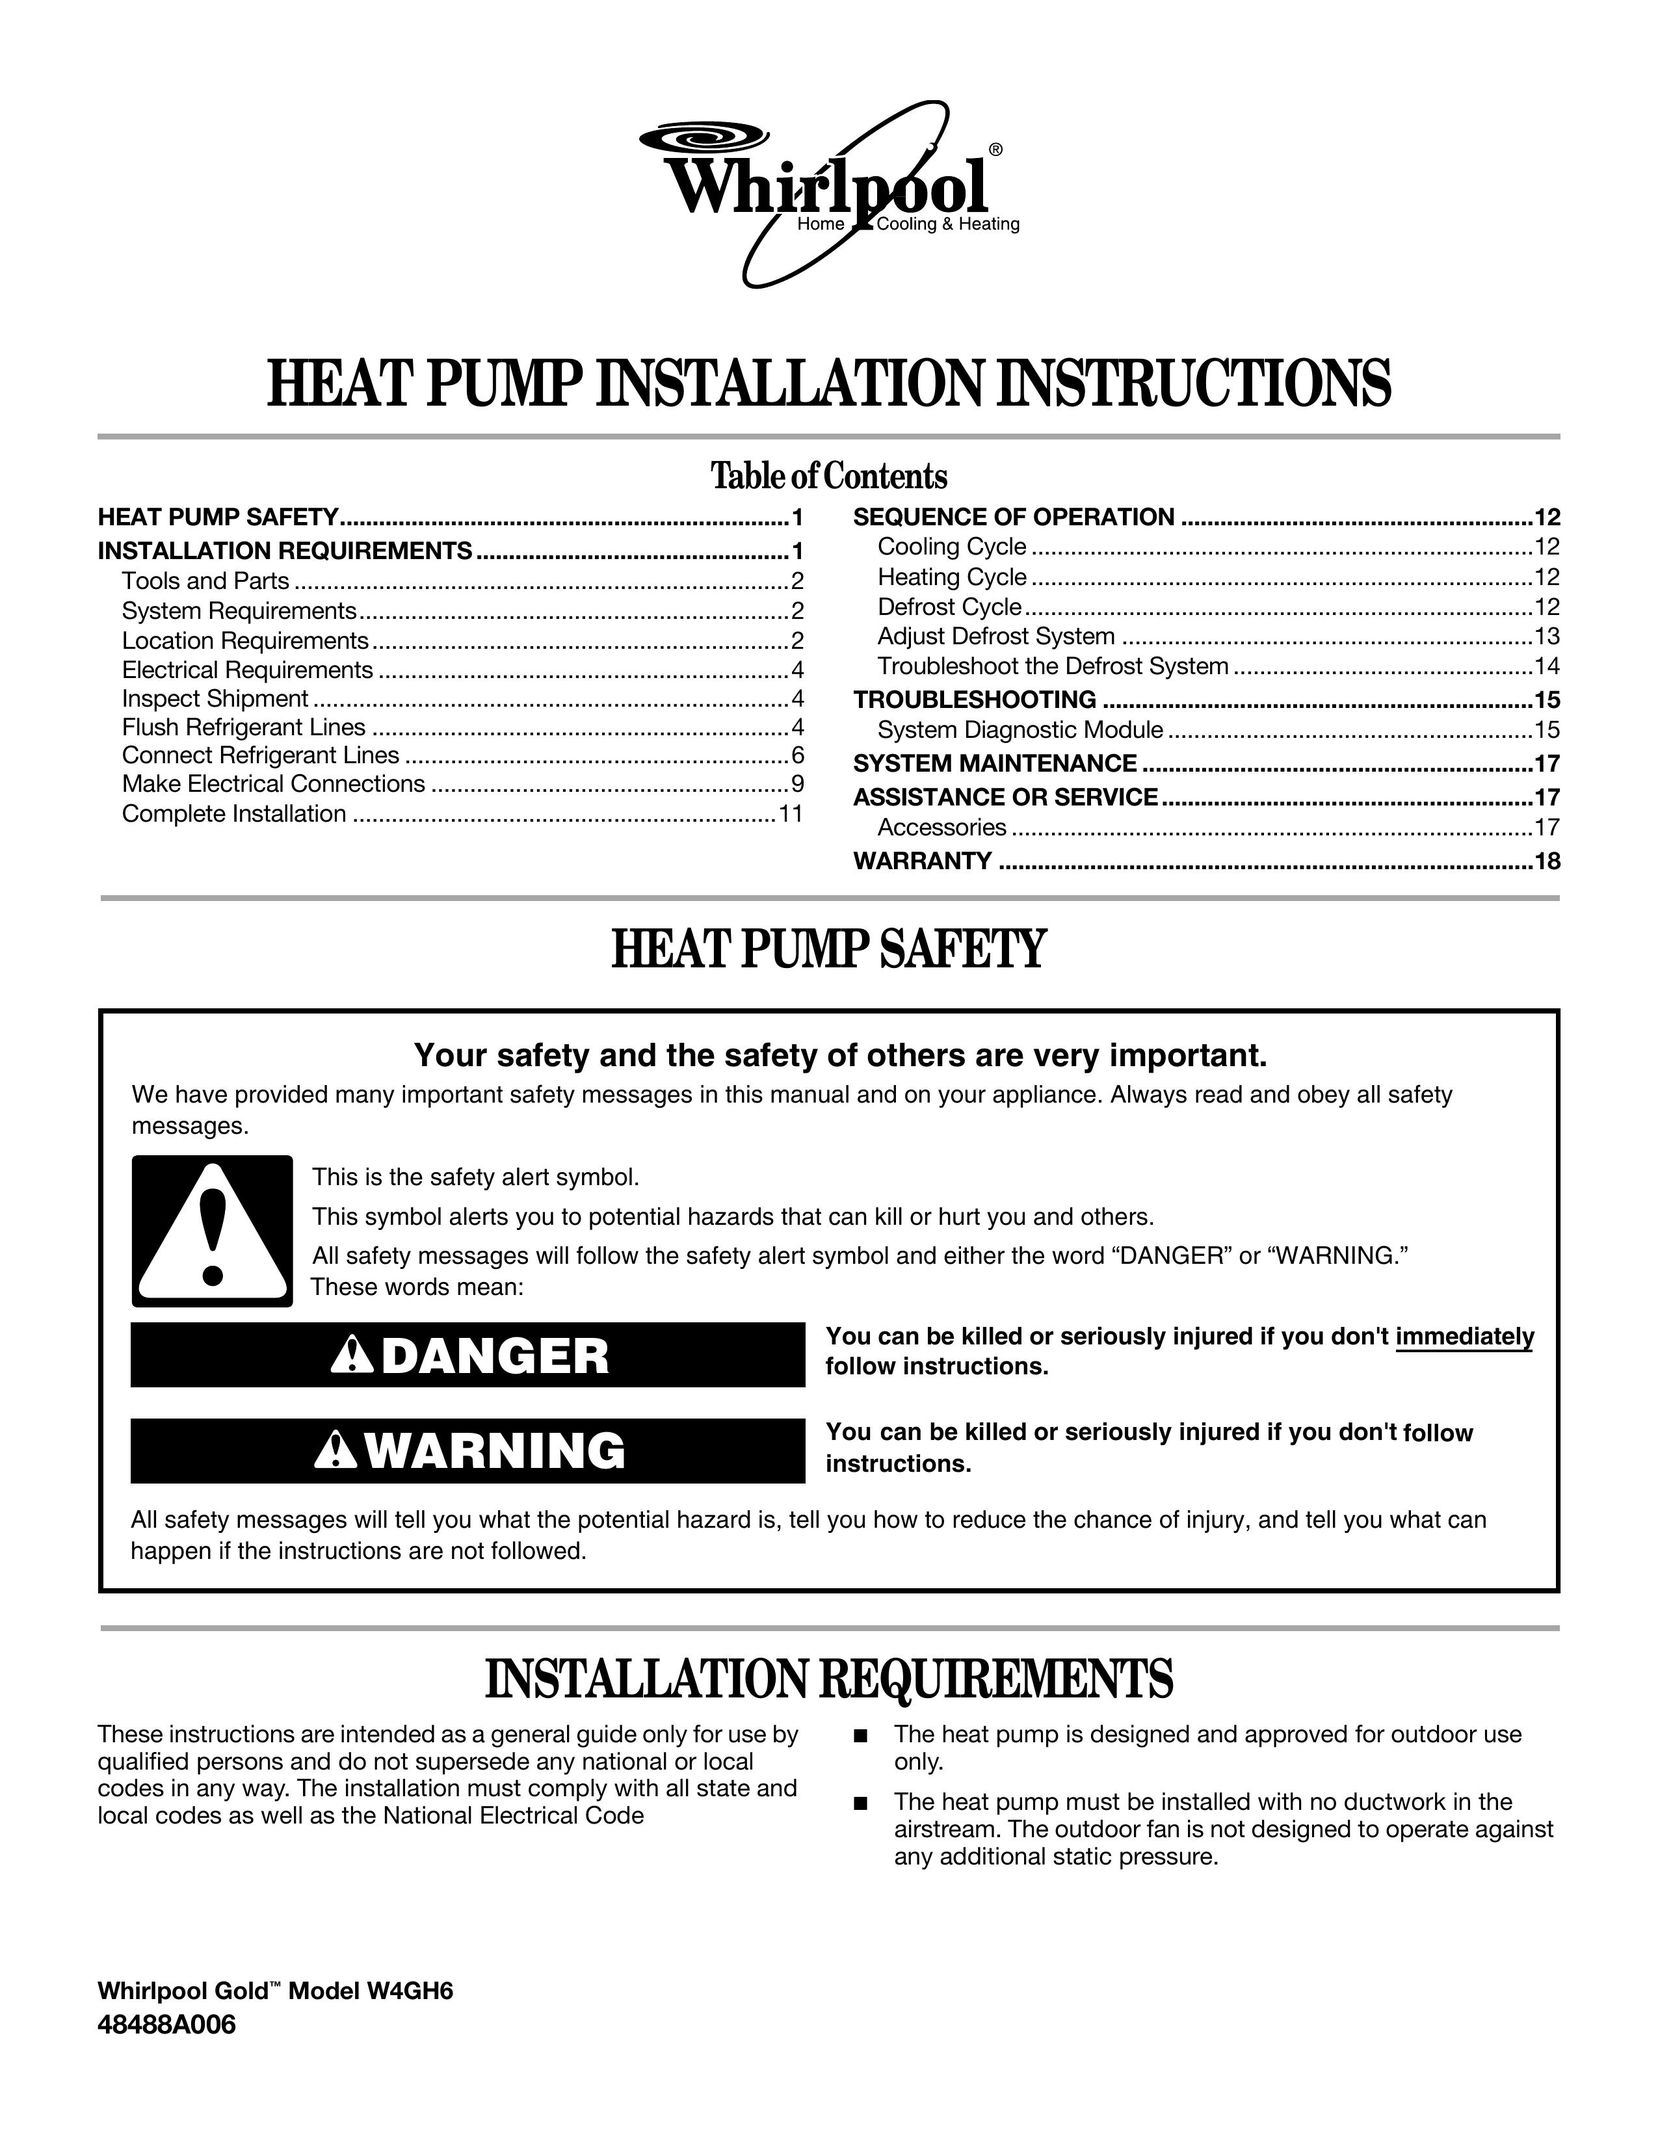 Whirlpool W4GH6 Heat Pump User Manual